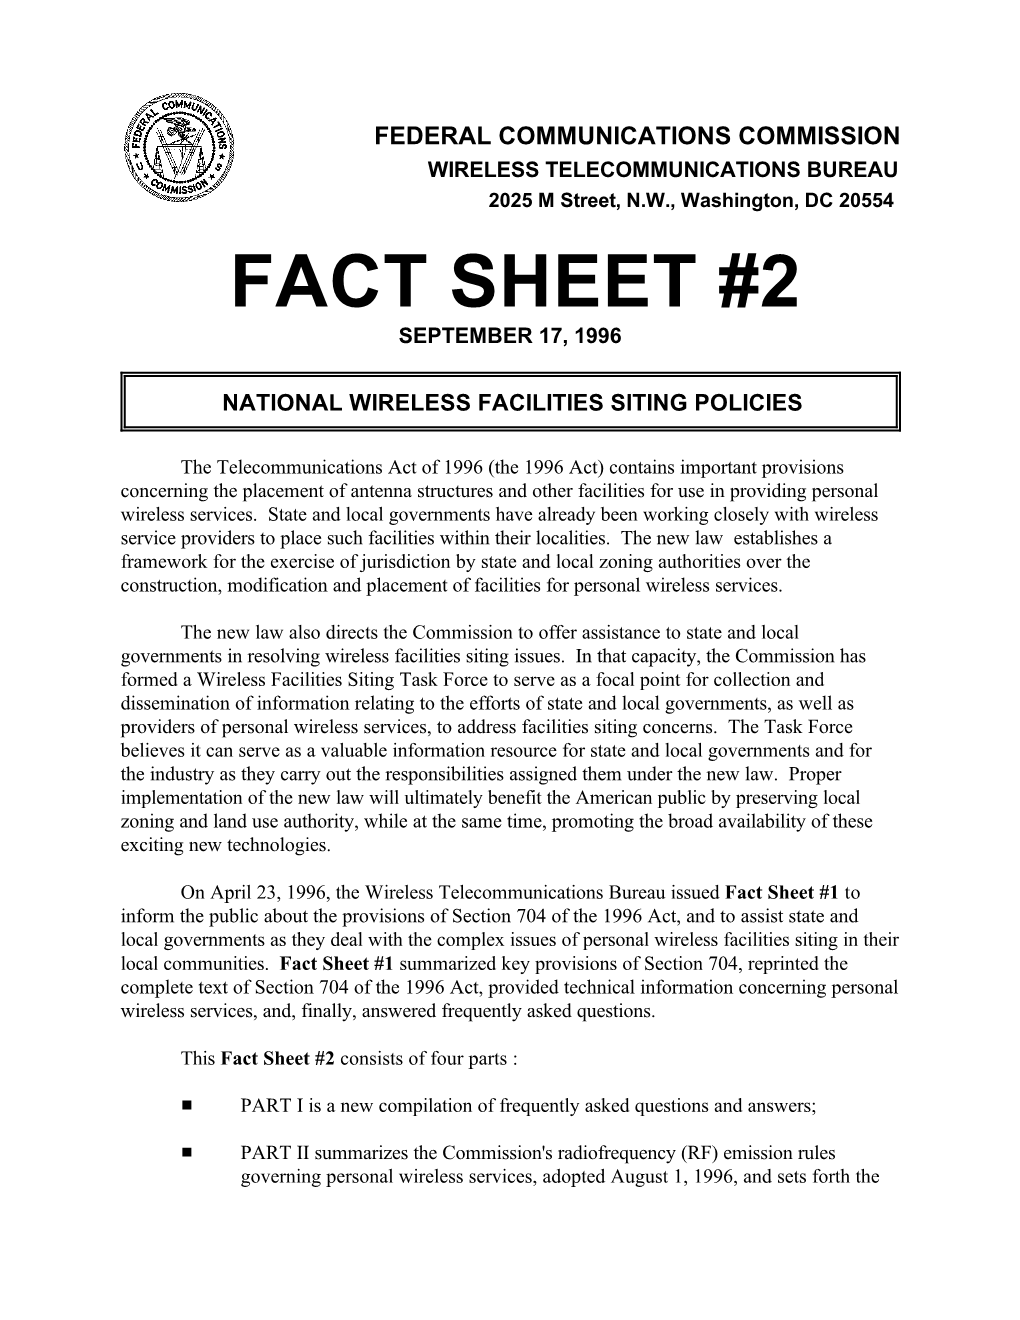 FCC Fact Sheet #2